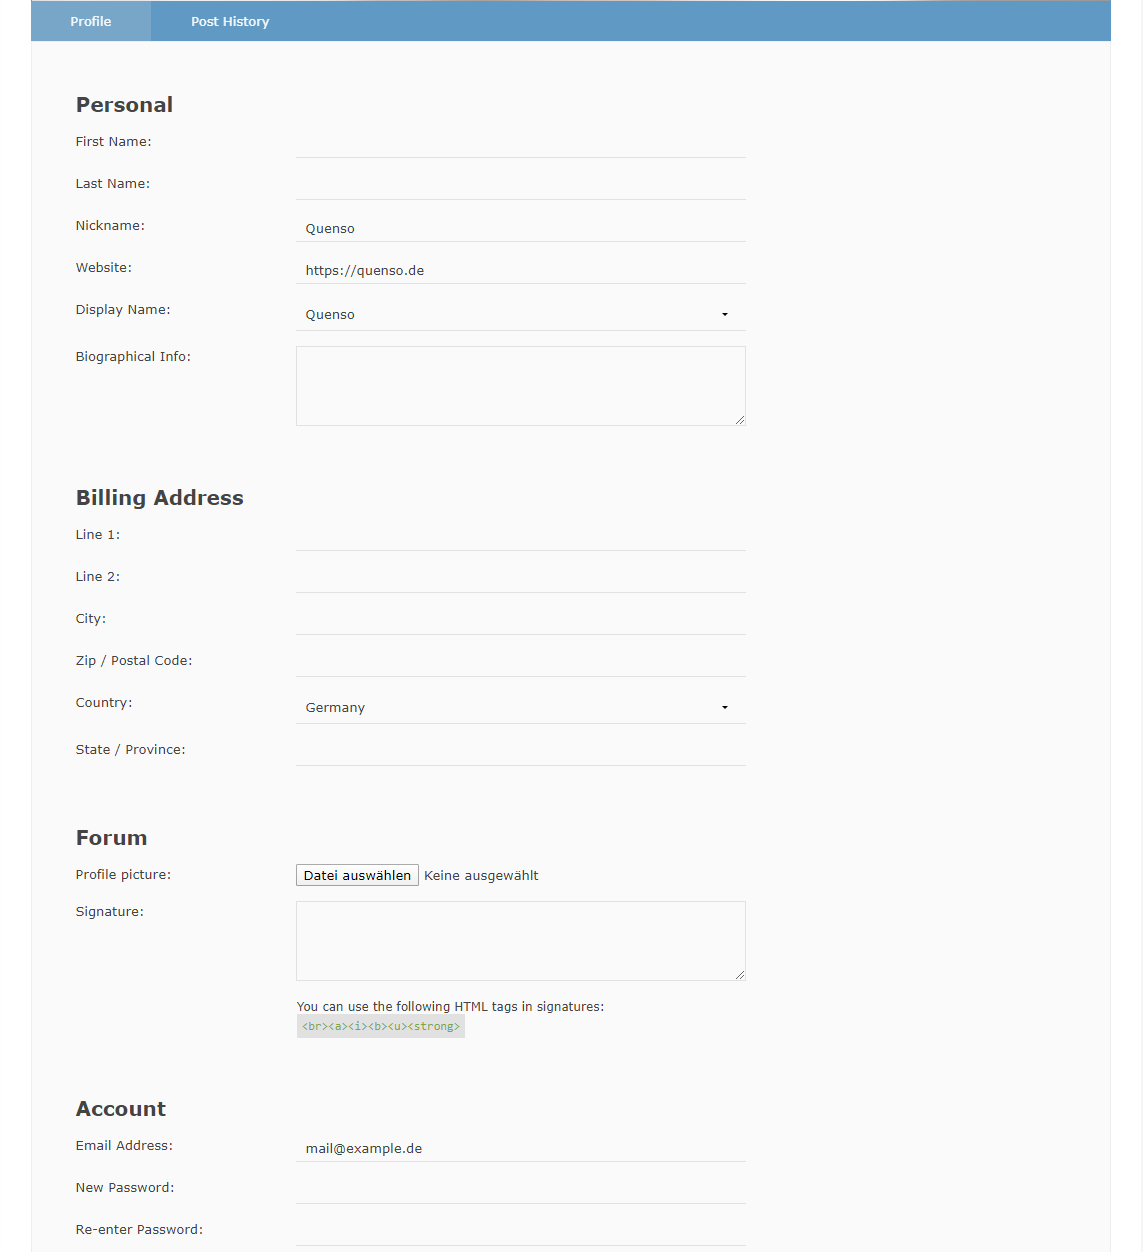 Edit profile form with custom avatar upload